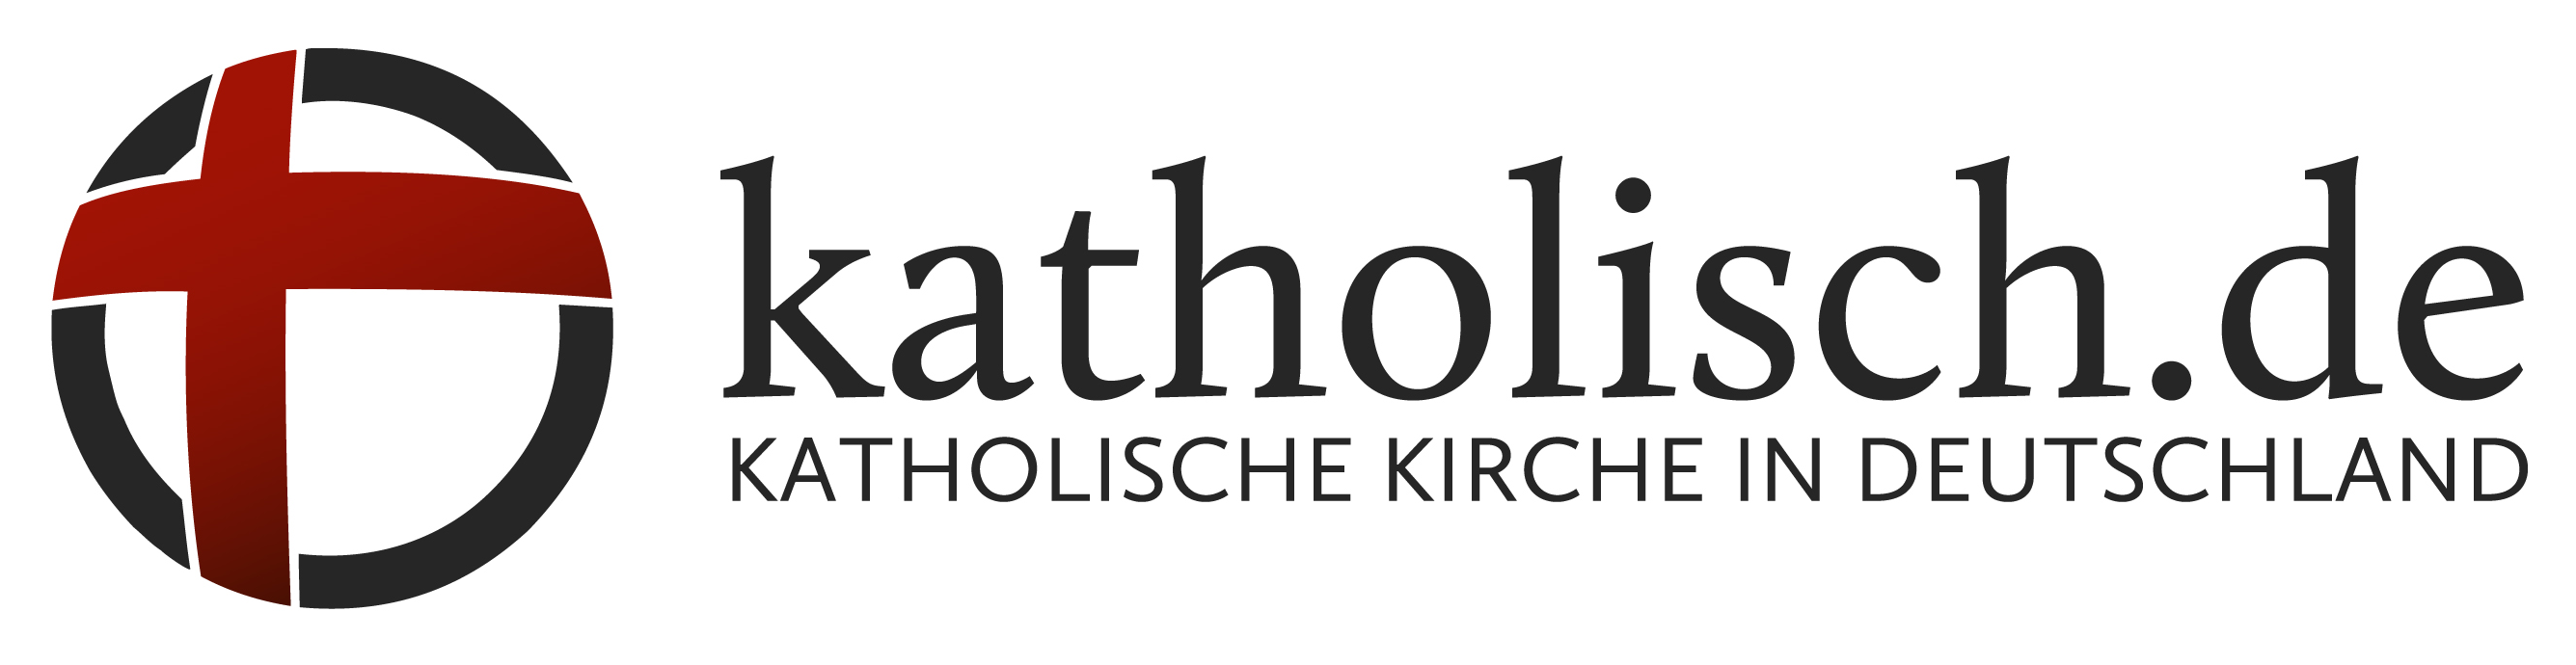 Logo katholisch.de